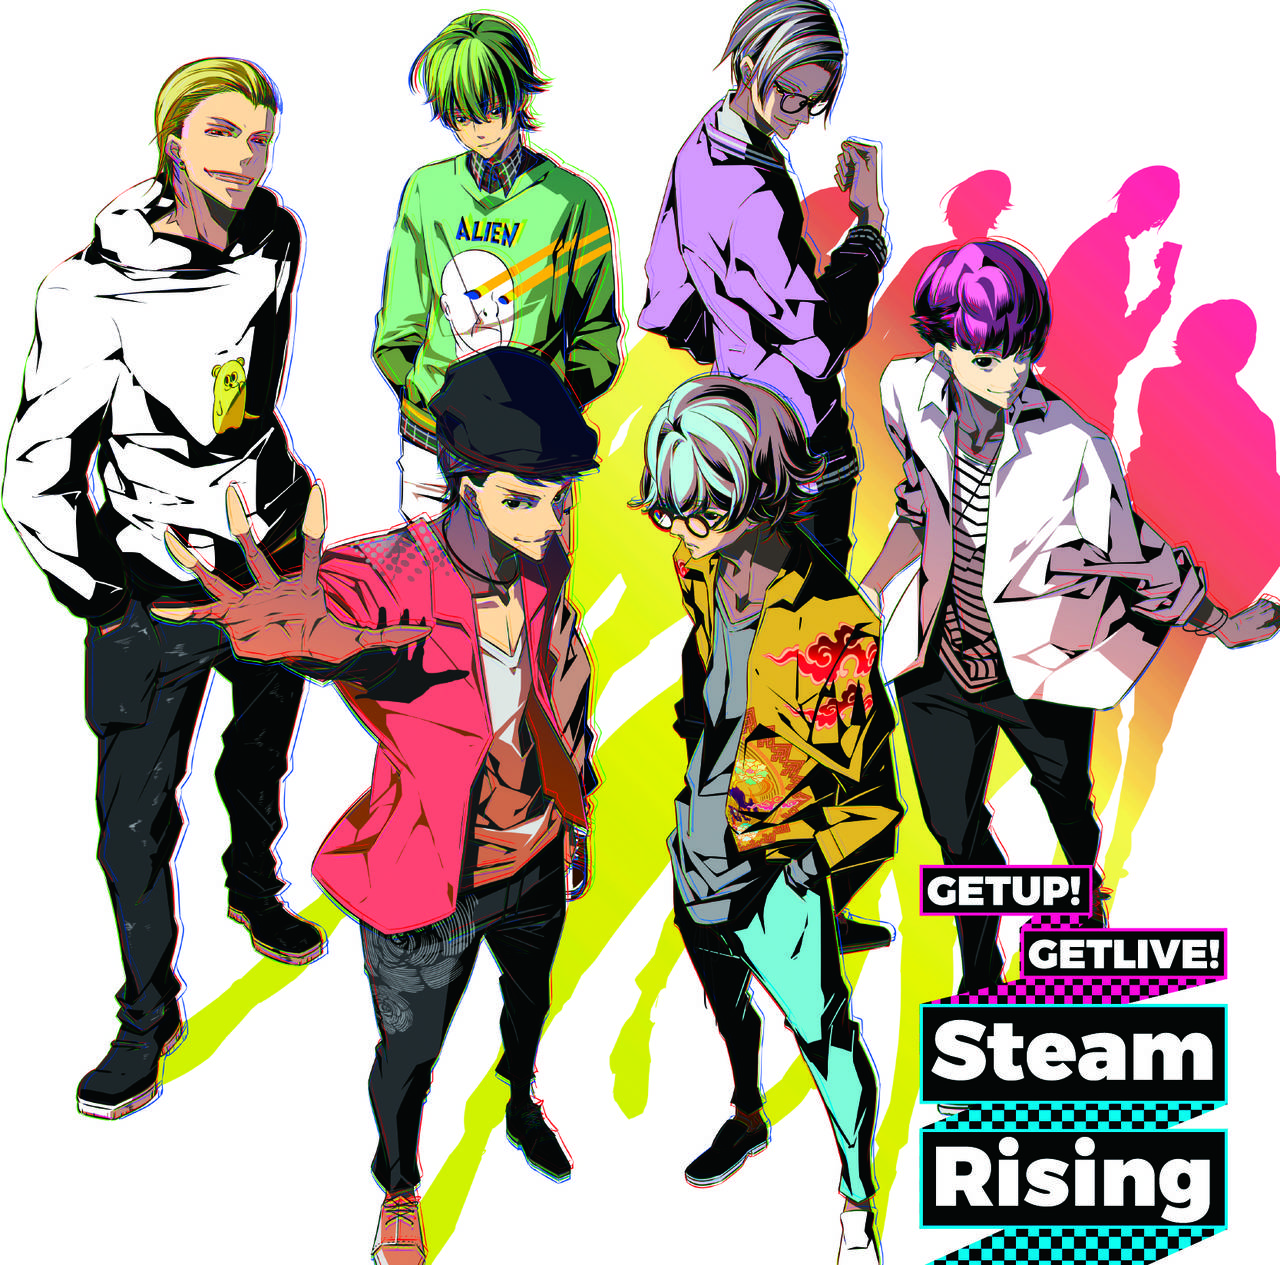 「GETUP! GETLIVE! Steam Rising」